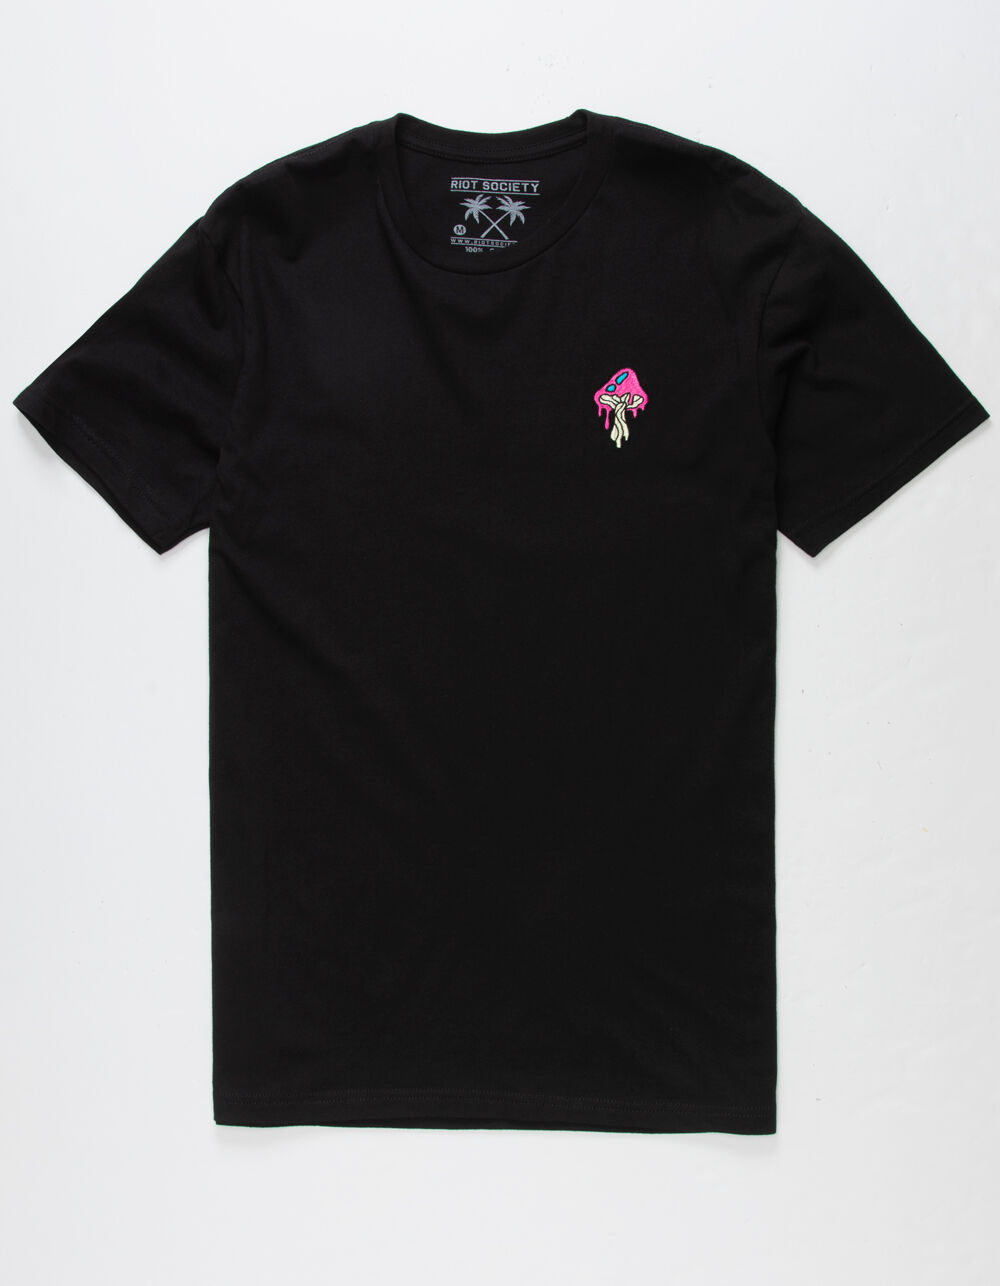 Riot Society Men's Short Sleeve Embroidered Logo T-Shirt 